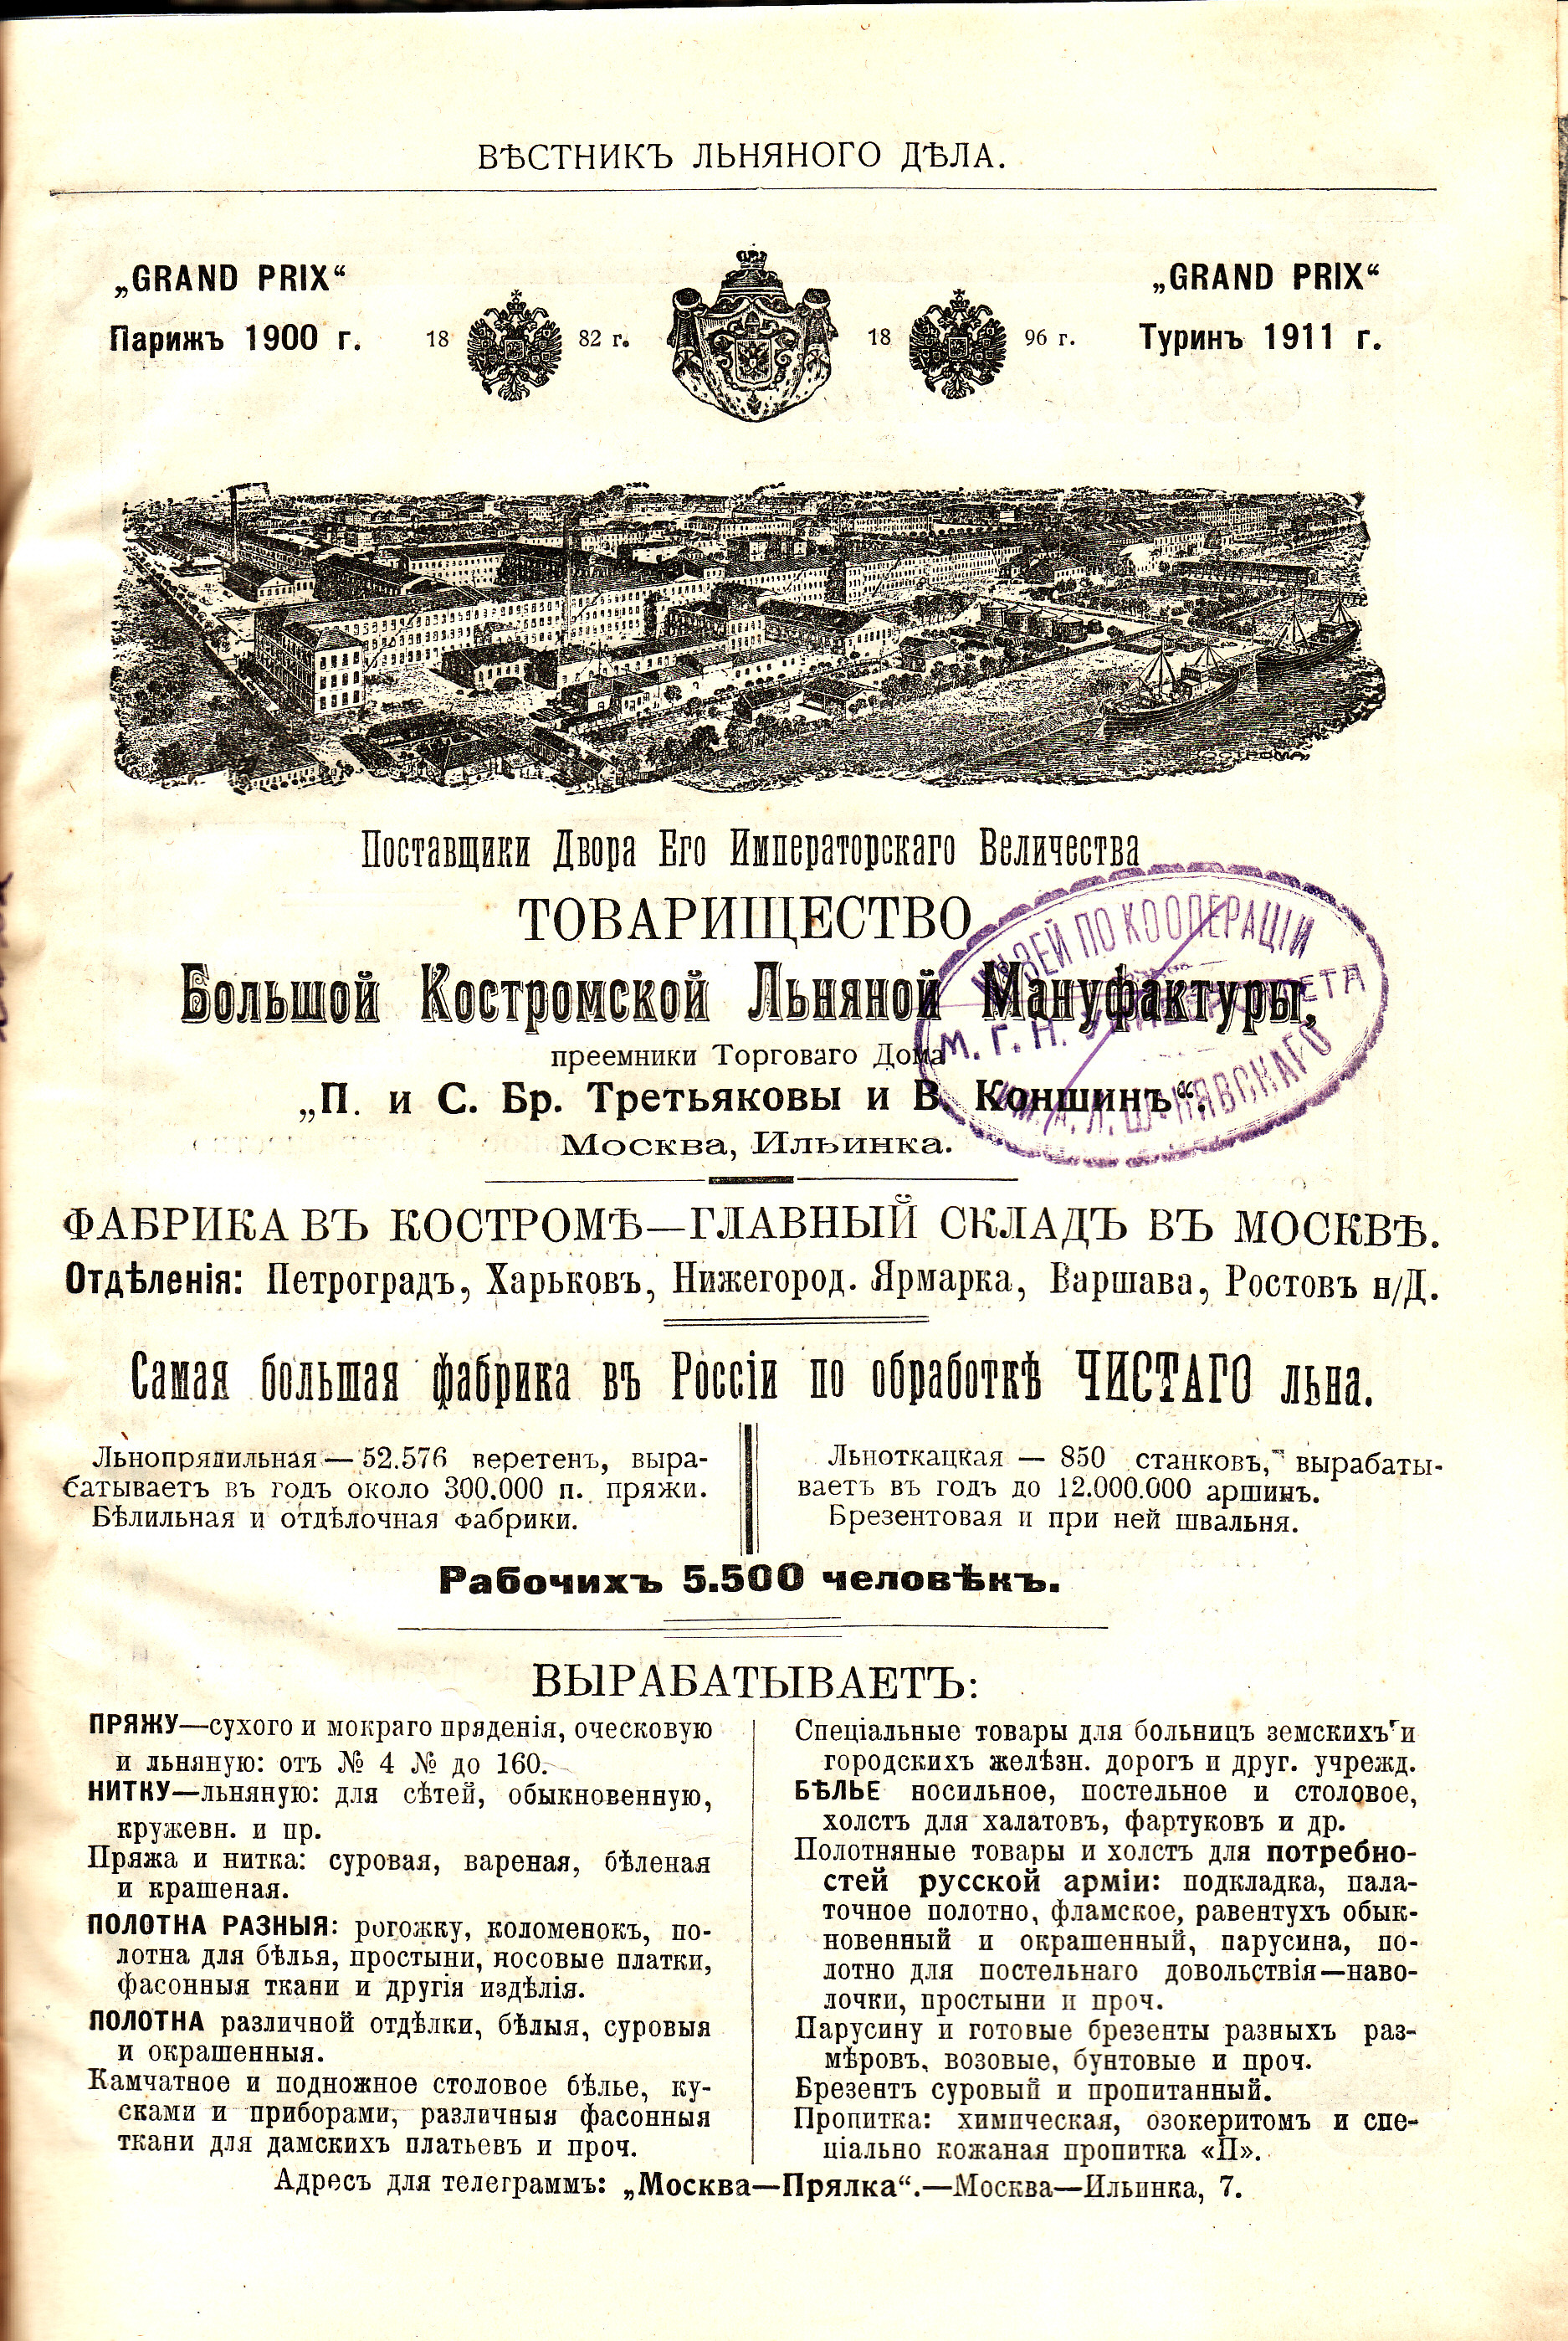  Большая Костромская Льняная Мануфактура.  Реклама 1916 г.